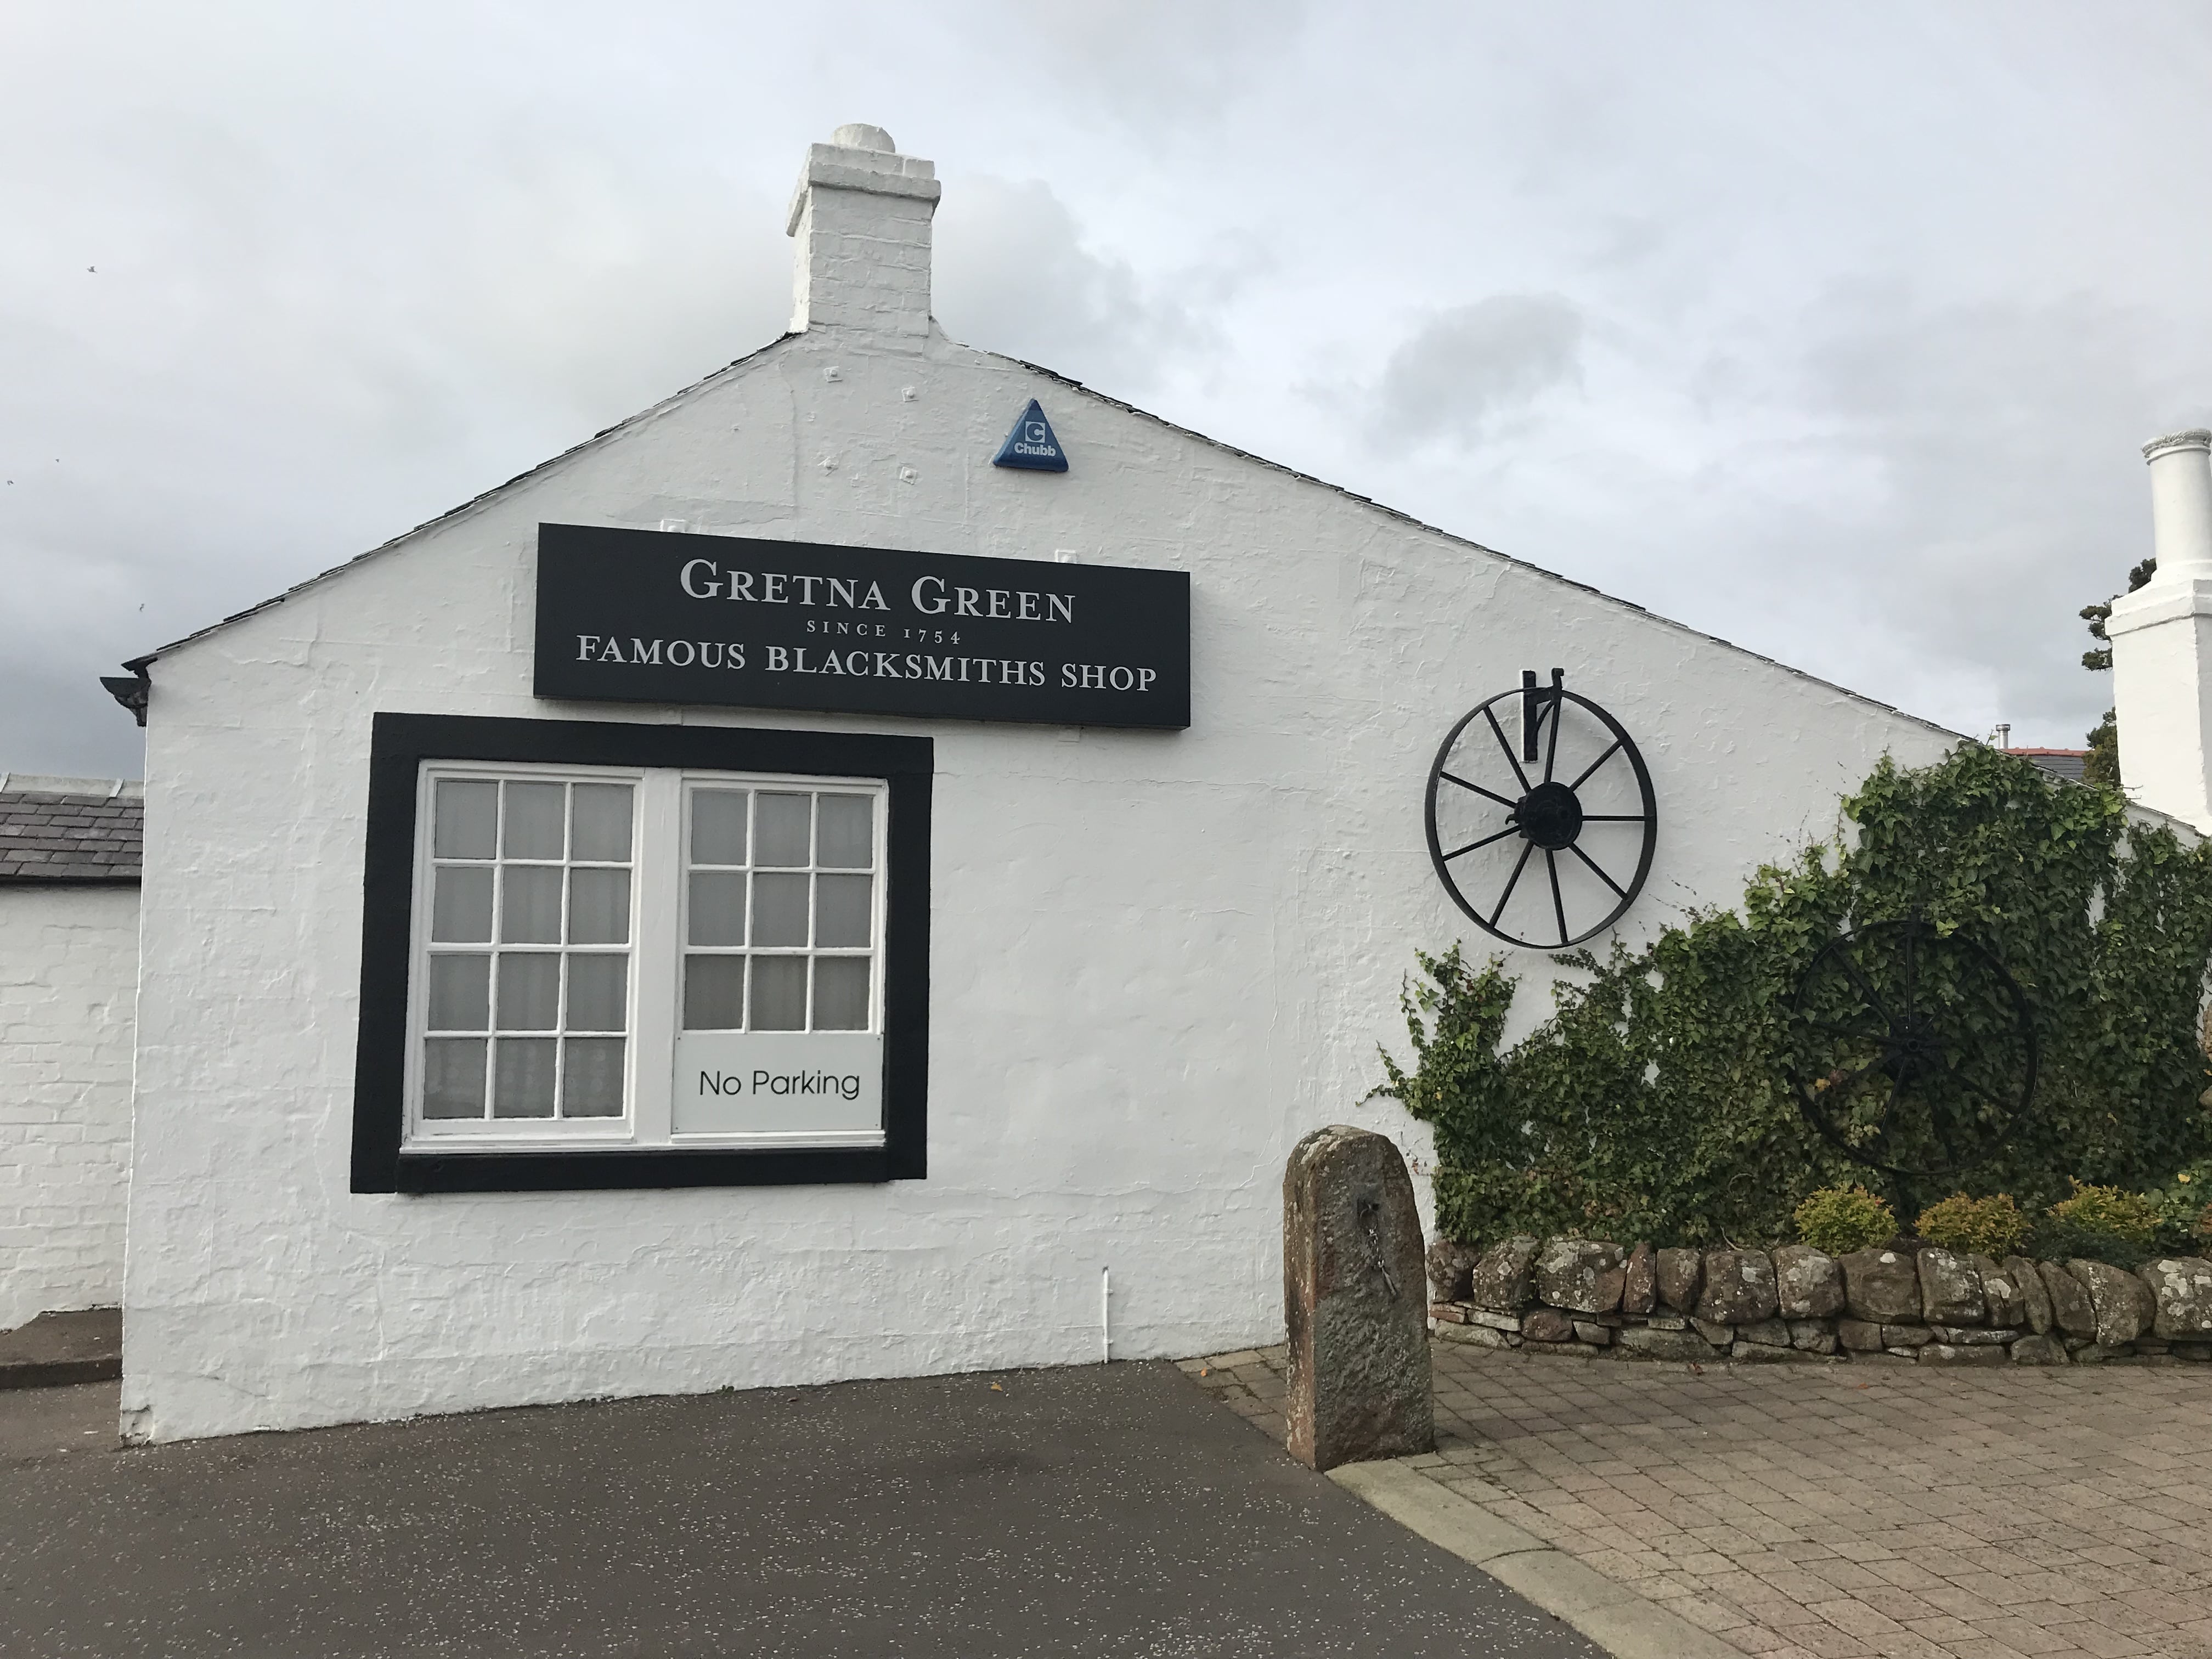 The Famous Blacksmith Shop at Gretna Green